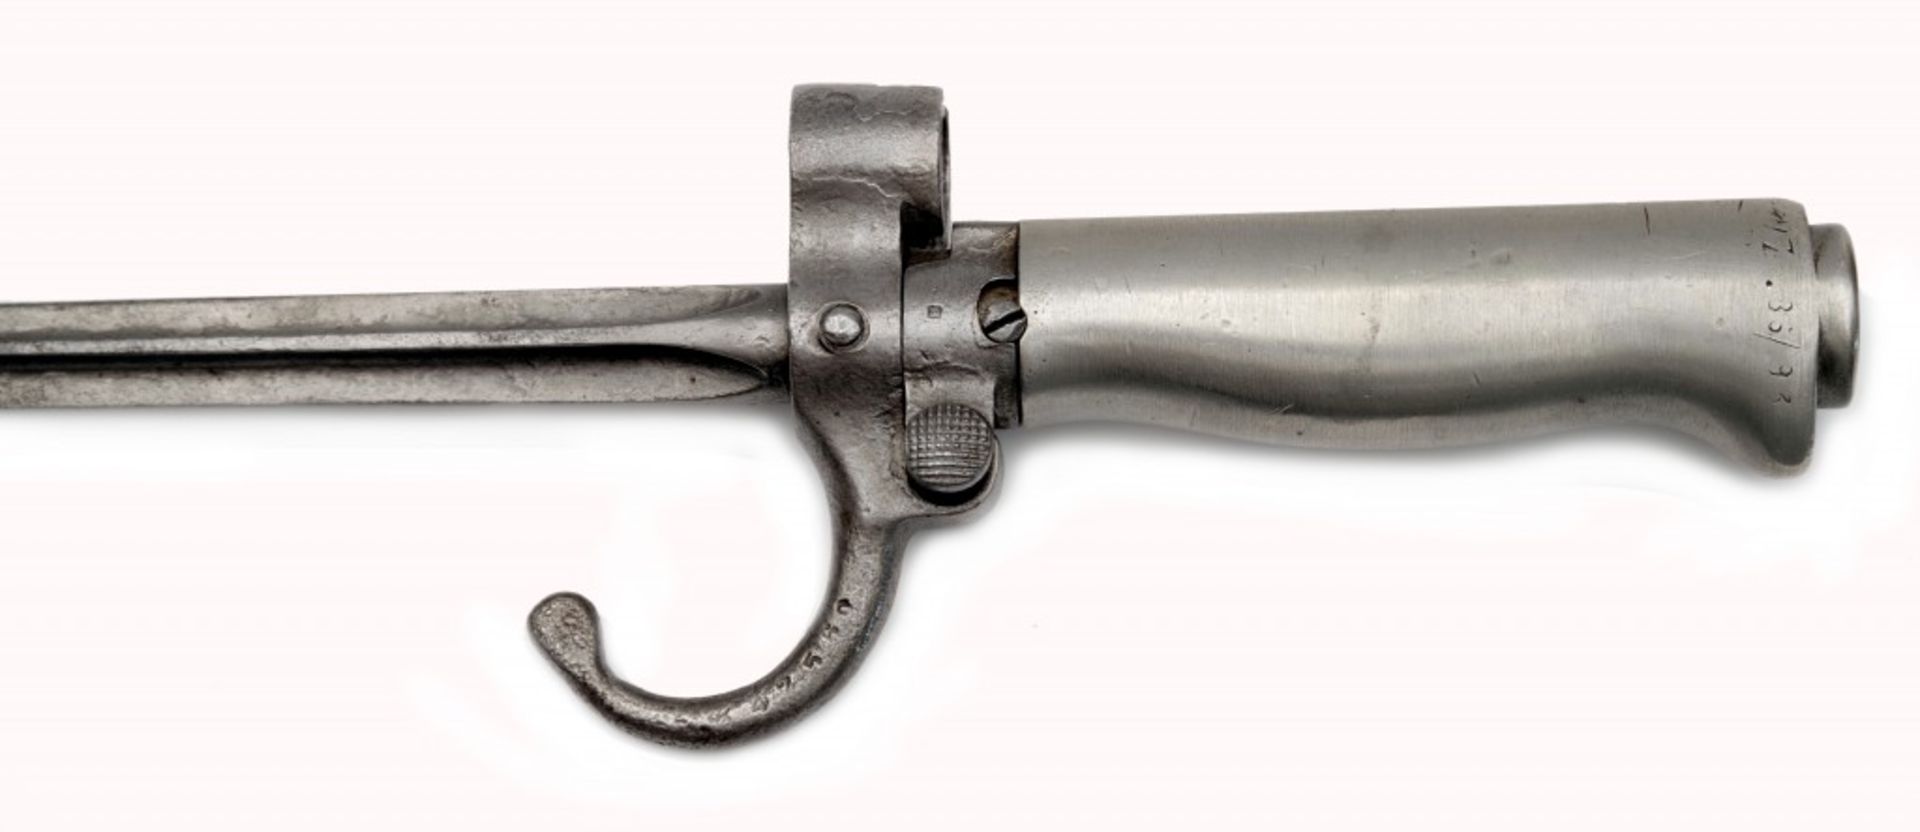 Nadelbajonett für Lebel Gewehr (Rosalie) Modell 1866, erstes Modell - Bild 2 aus 3